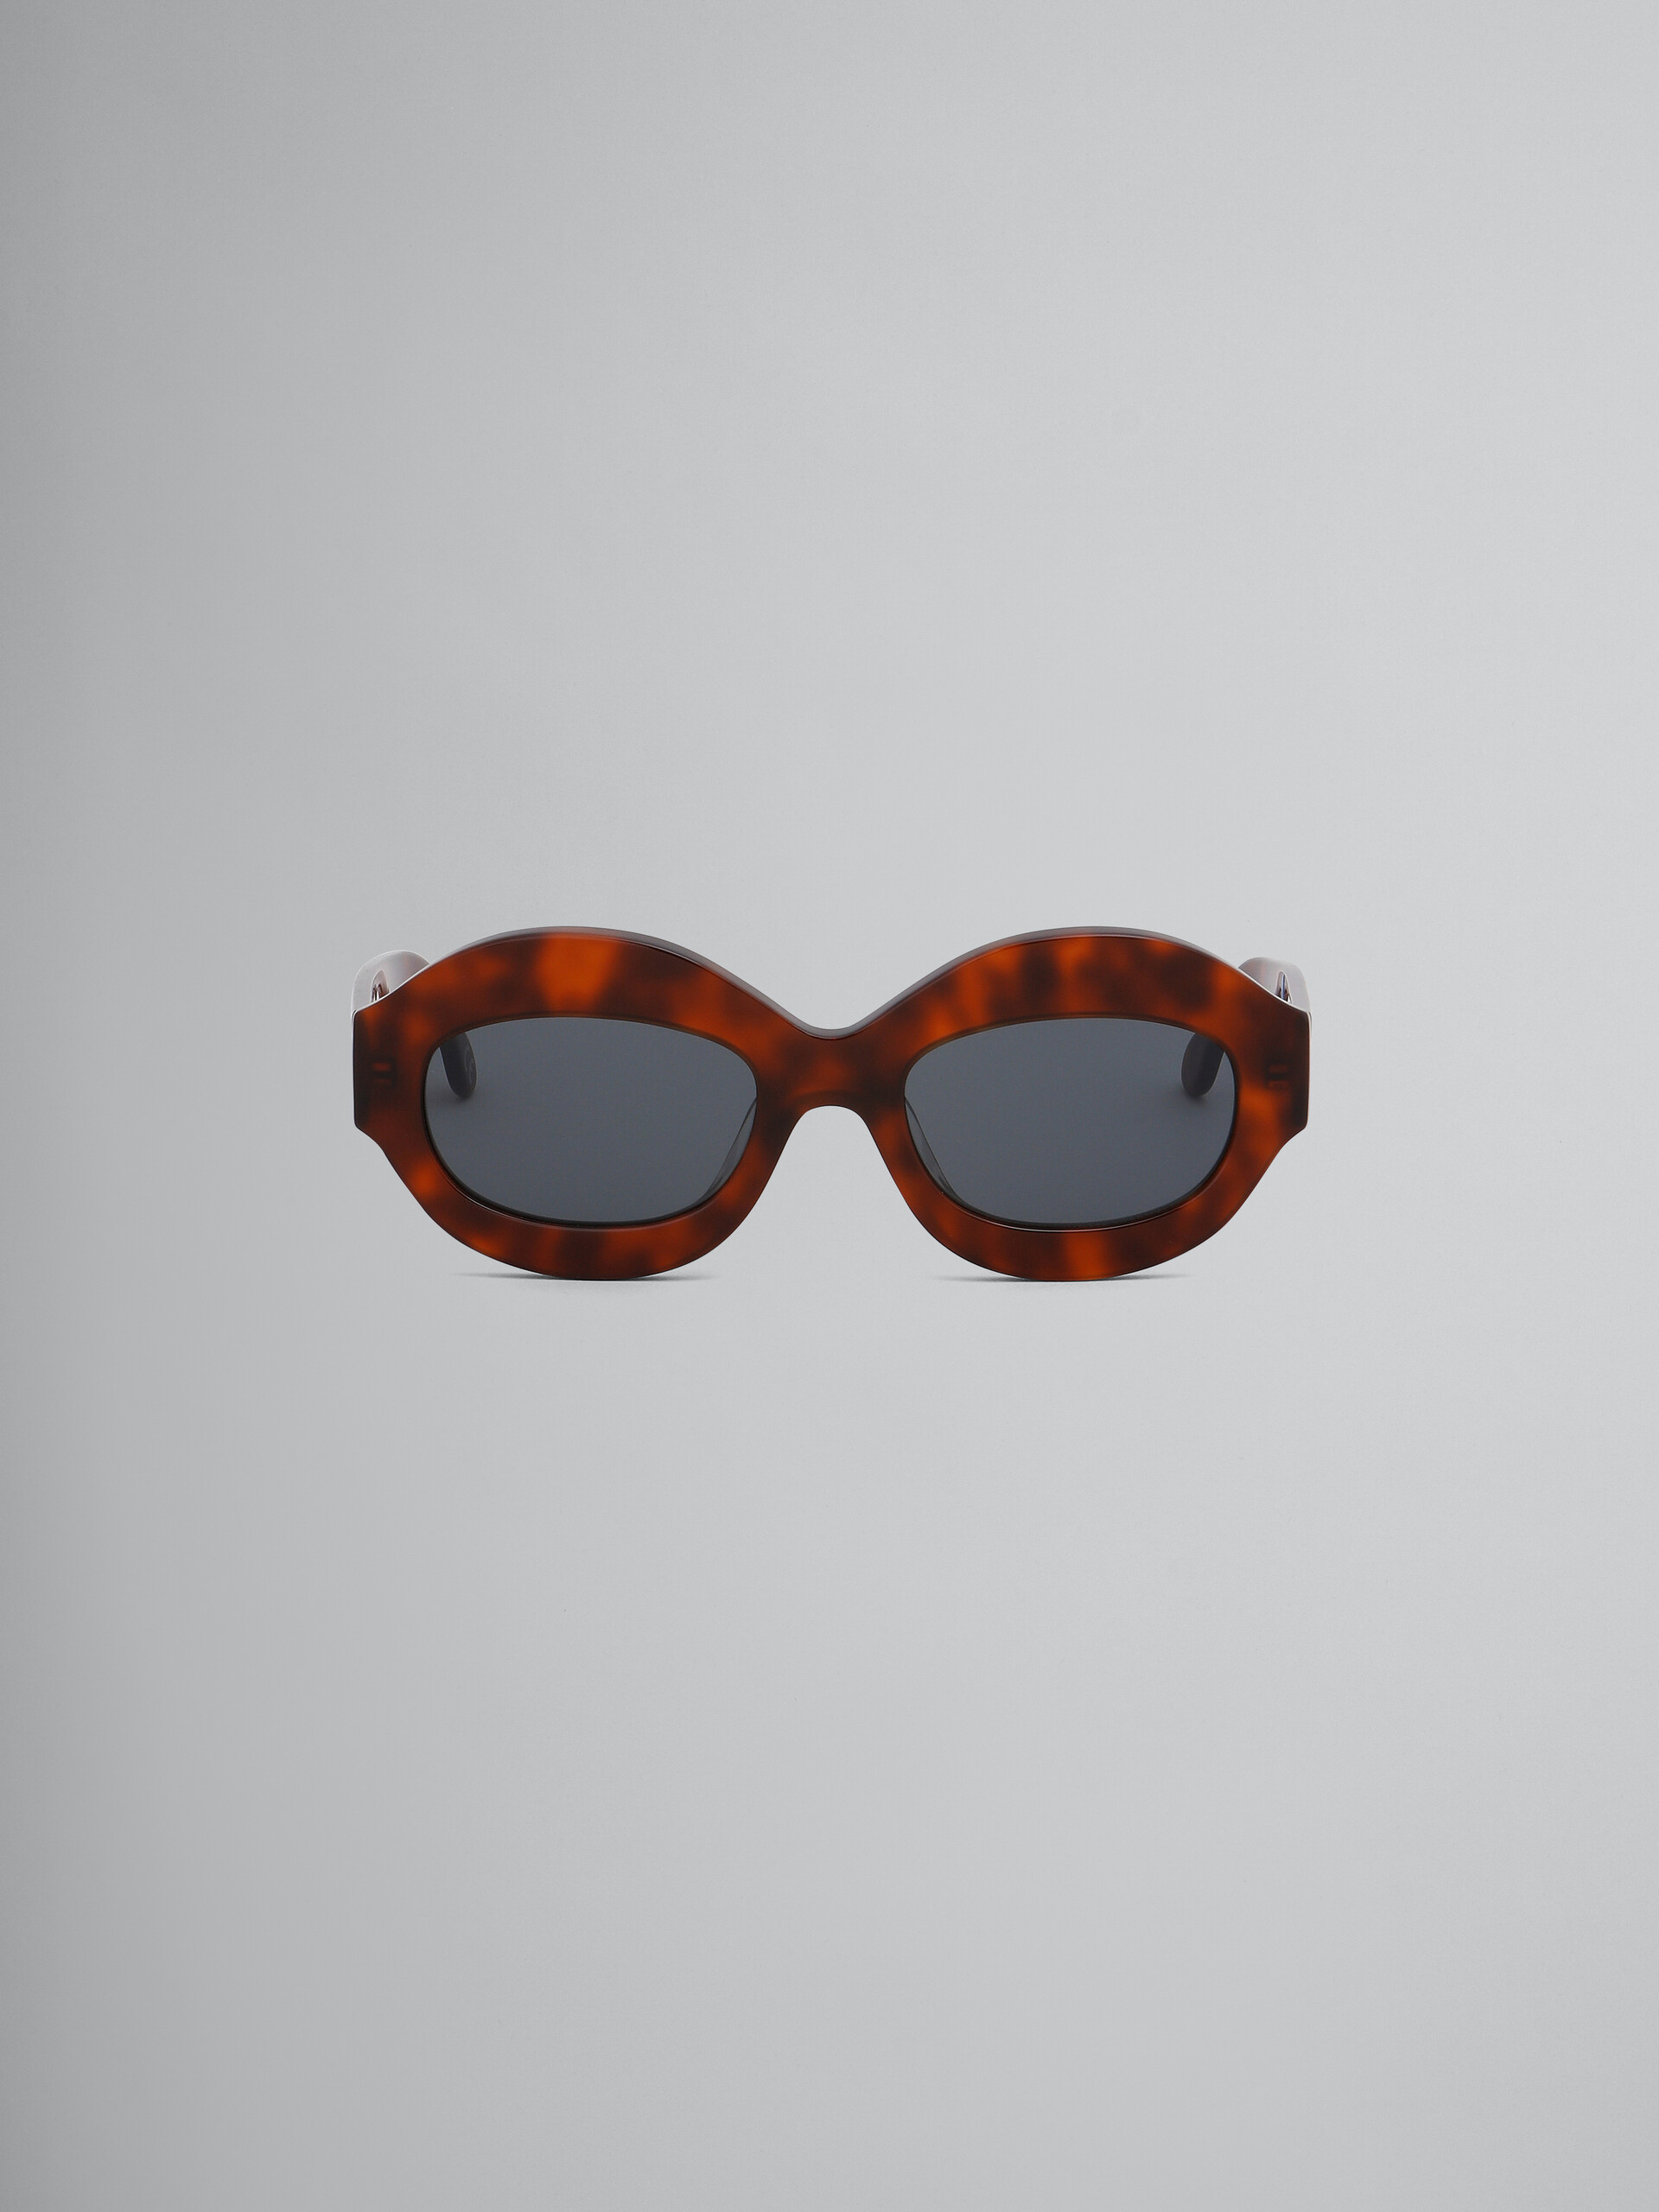 Black Ik Kil Cenote acetate sunglasses - Optical - Image 1